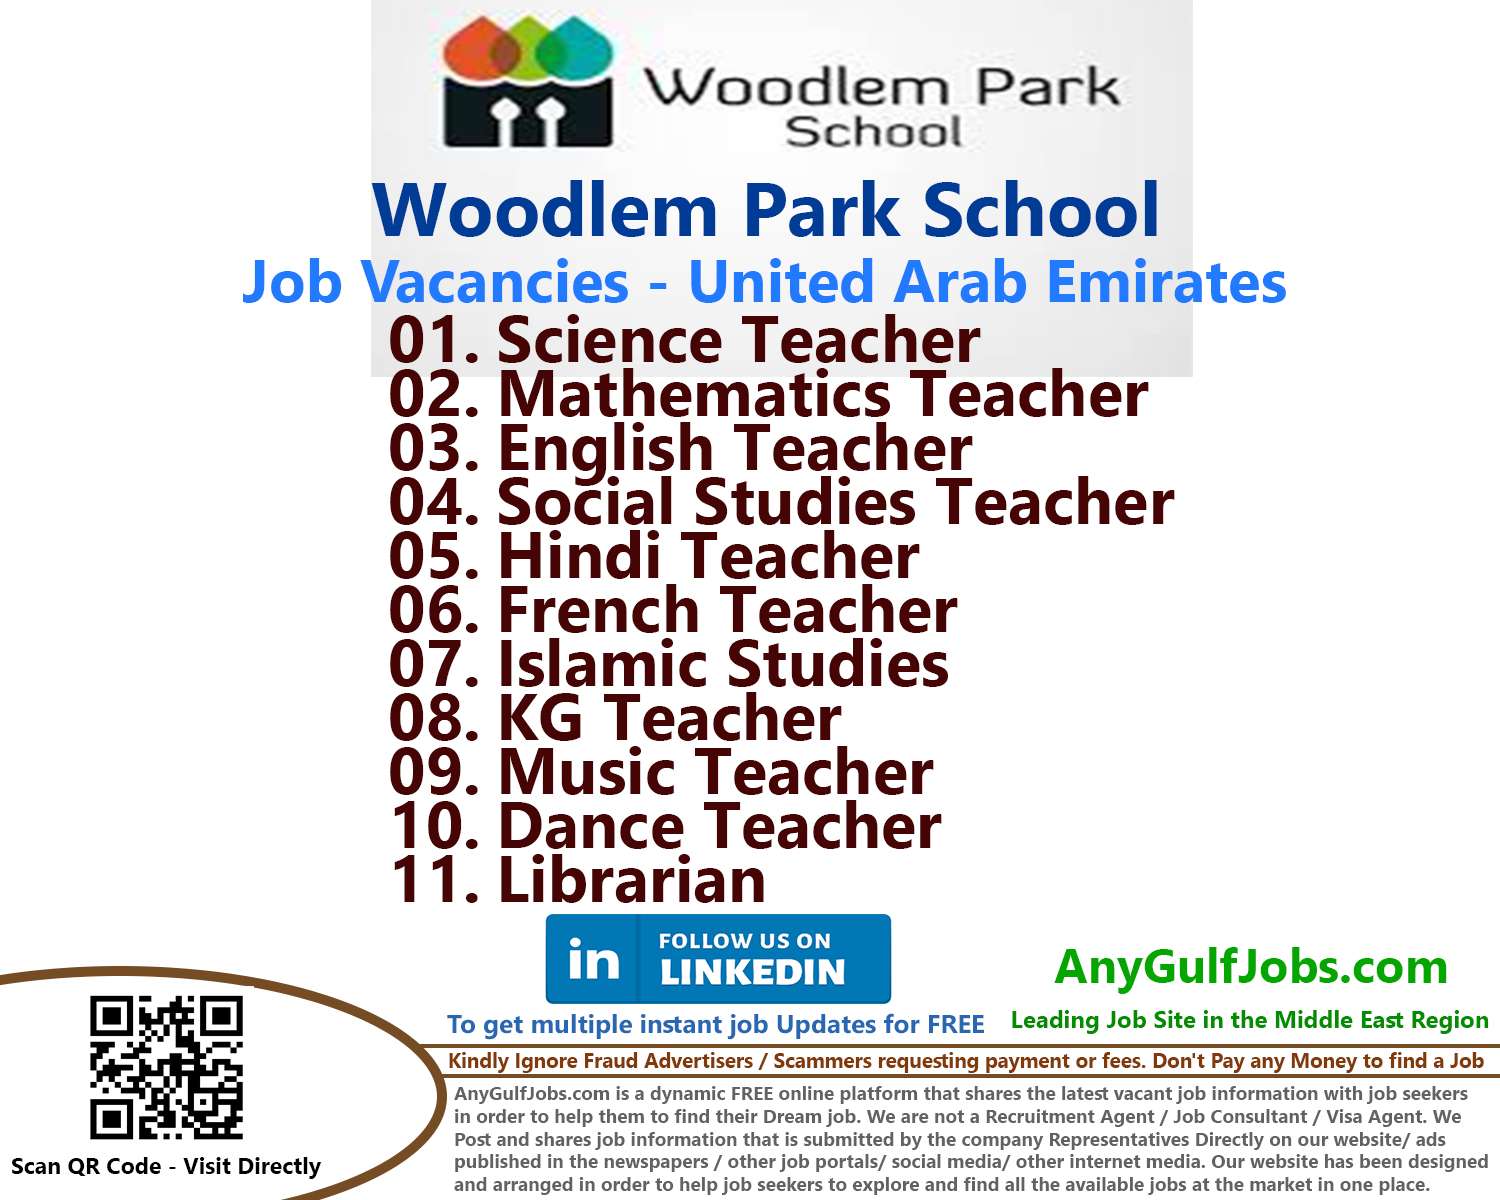 List of Woodlem Park School Jobs - United Arab Emirates